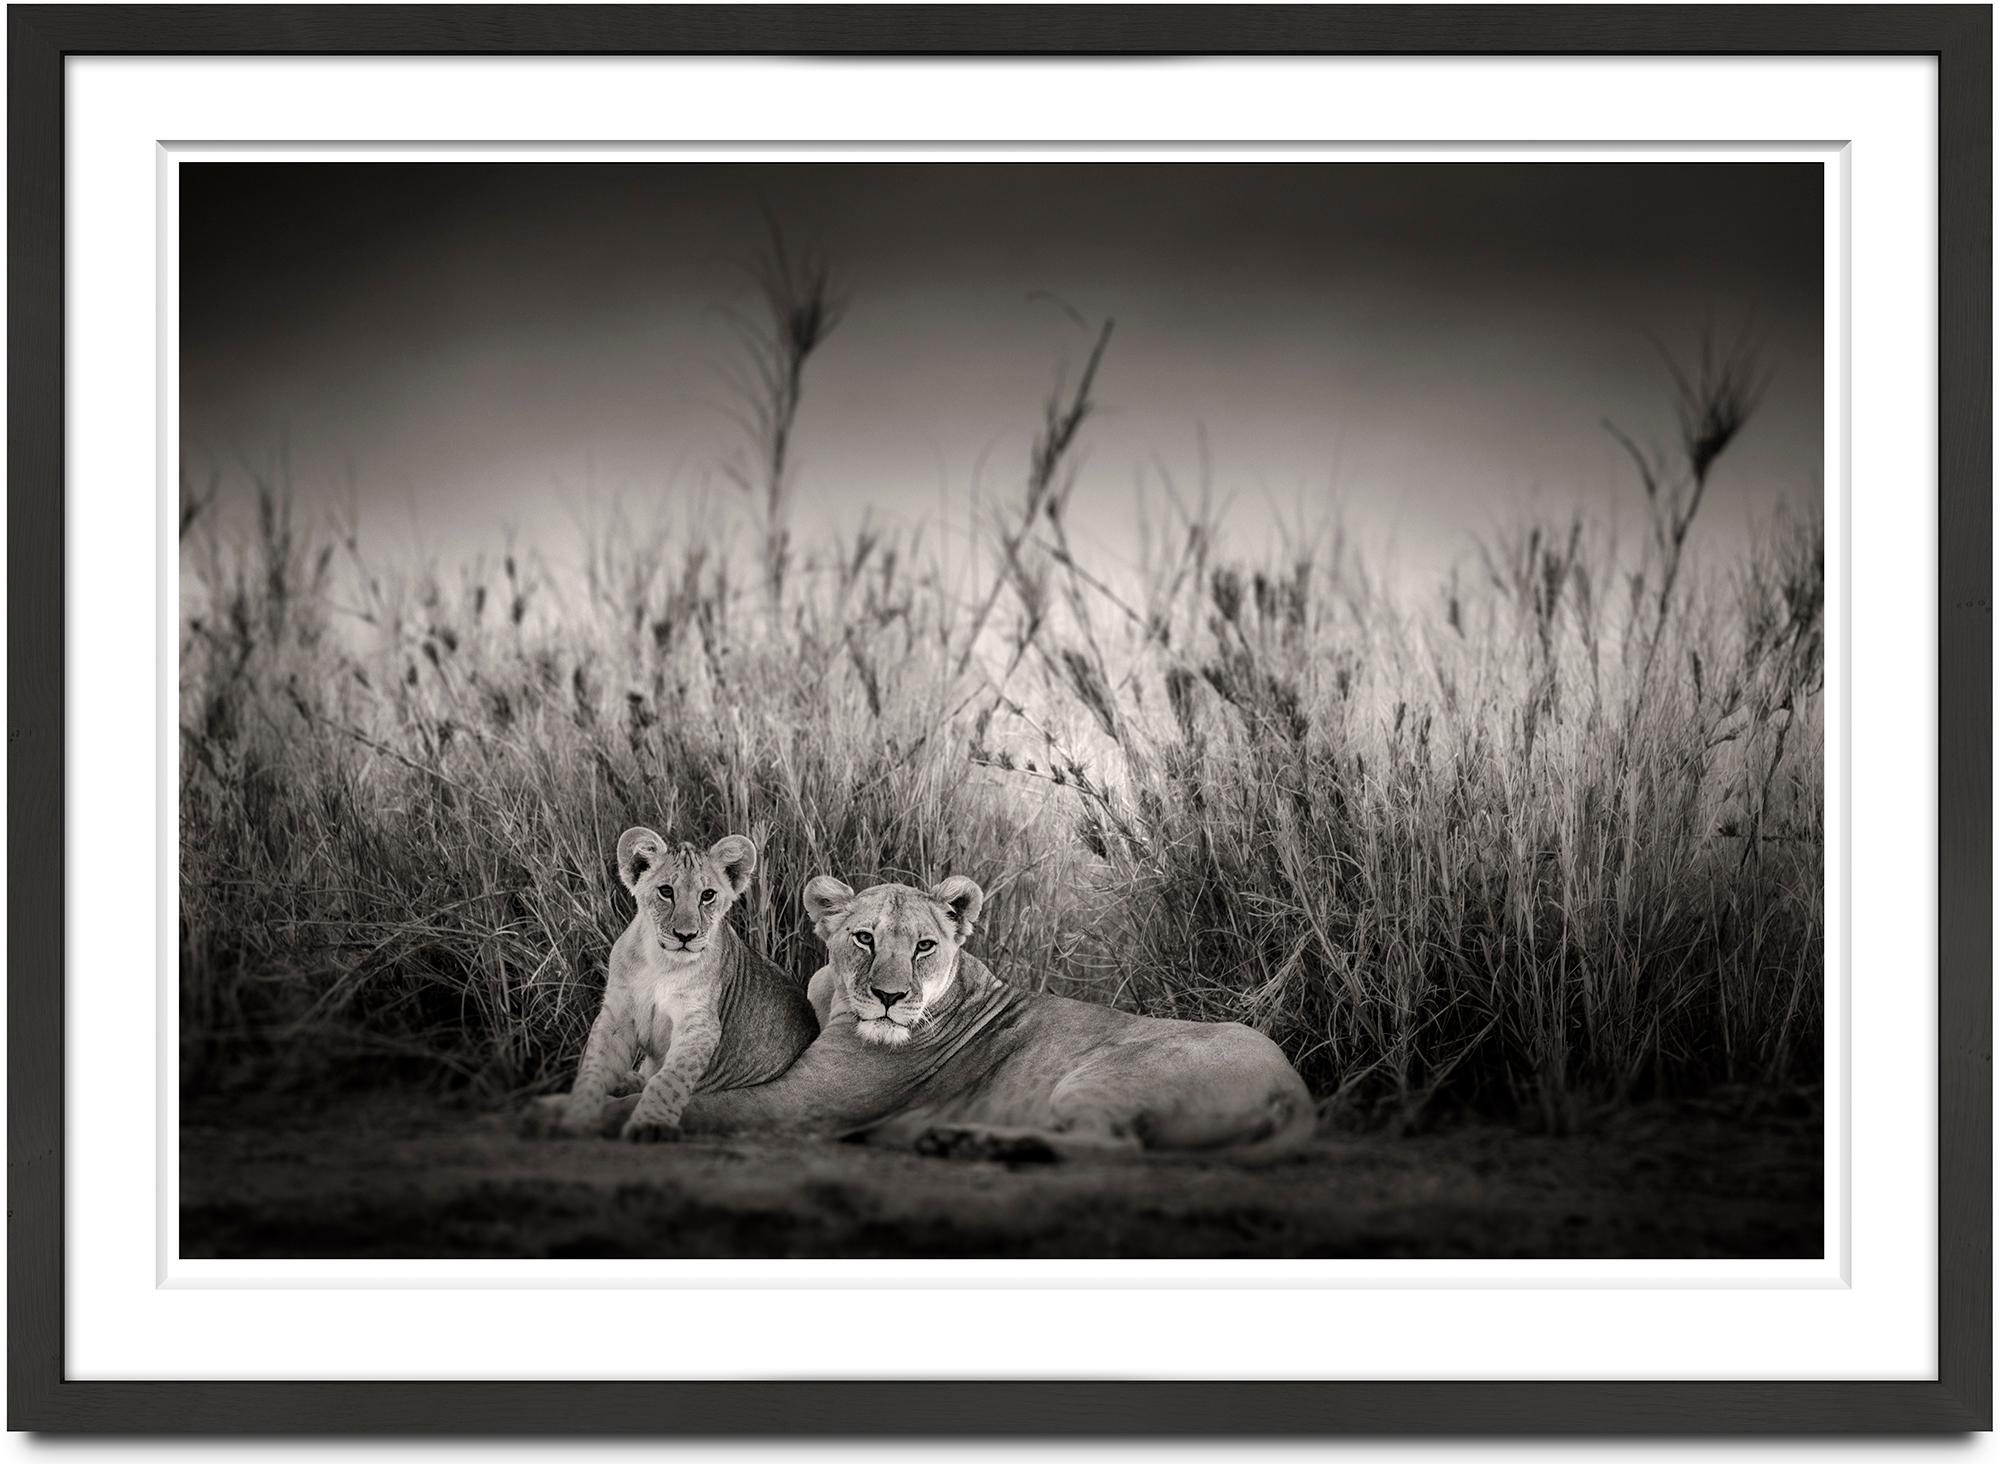  Sarabi + Simba, animal, wildlife, black and white photography, lion, africa - Photograph by Joachim Schmeisser